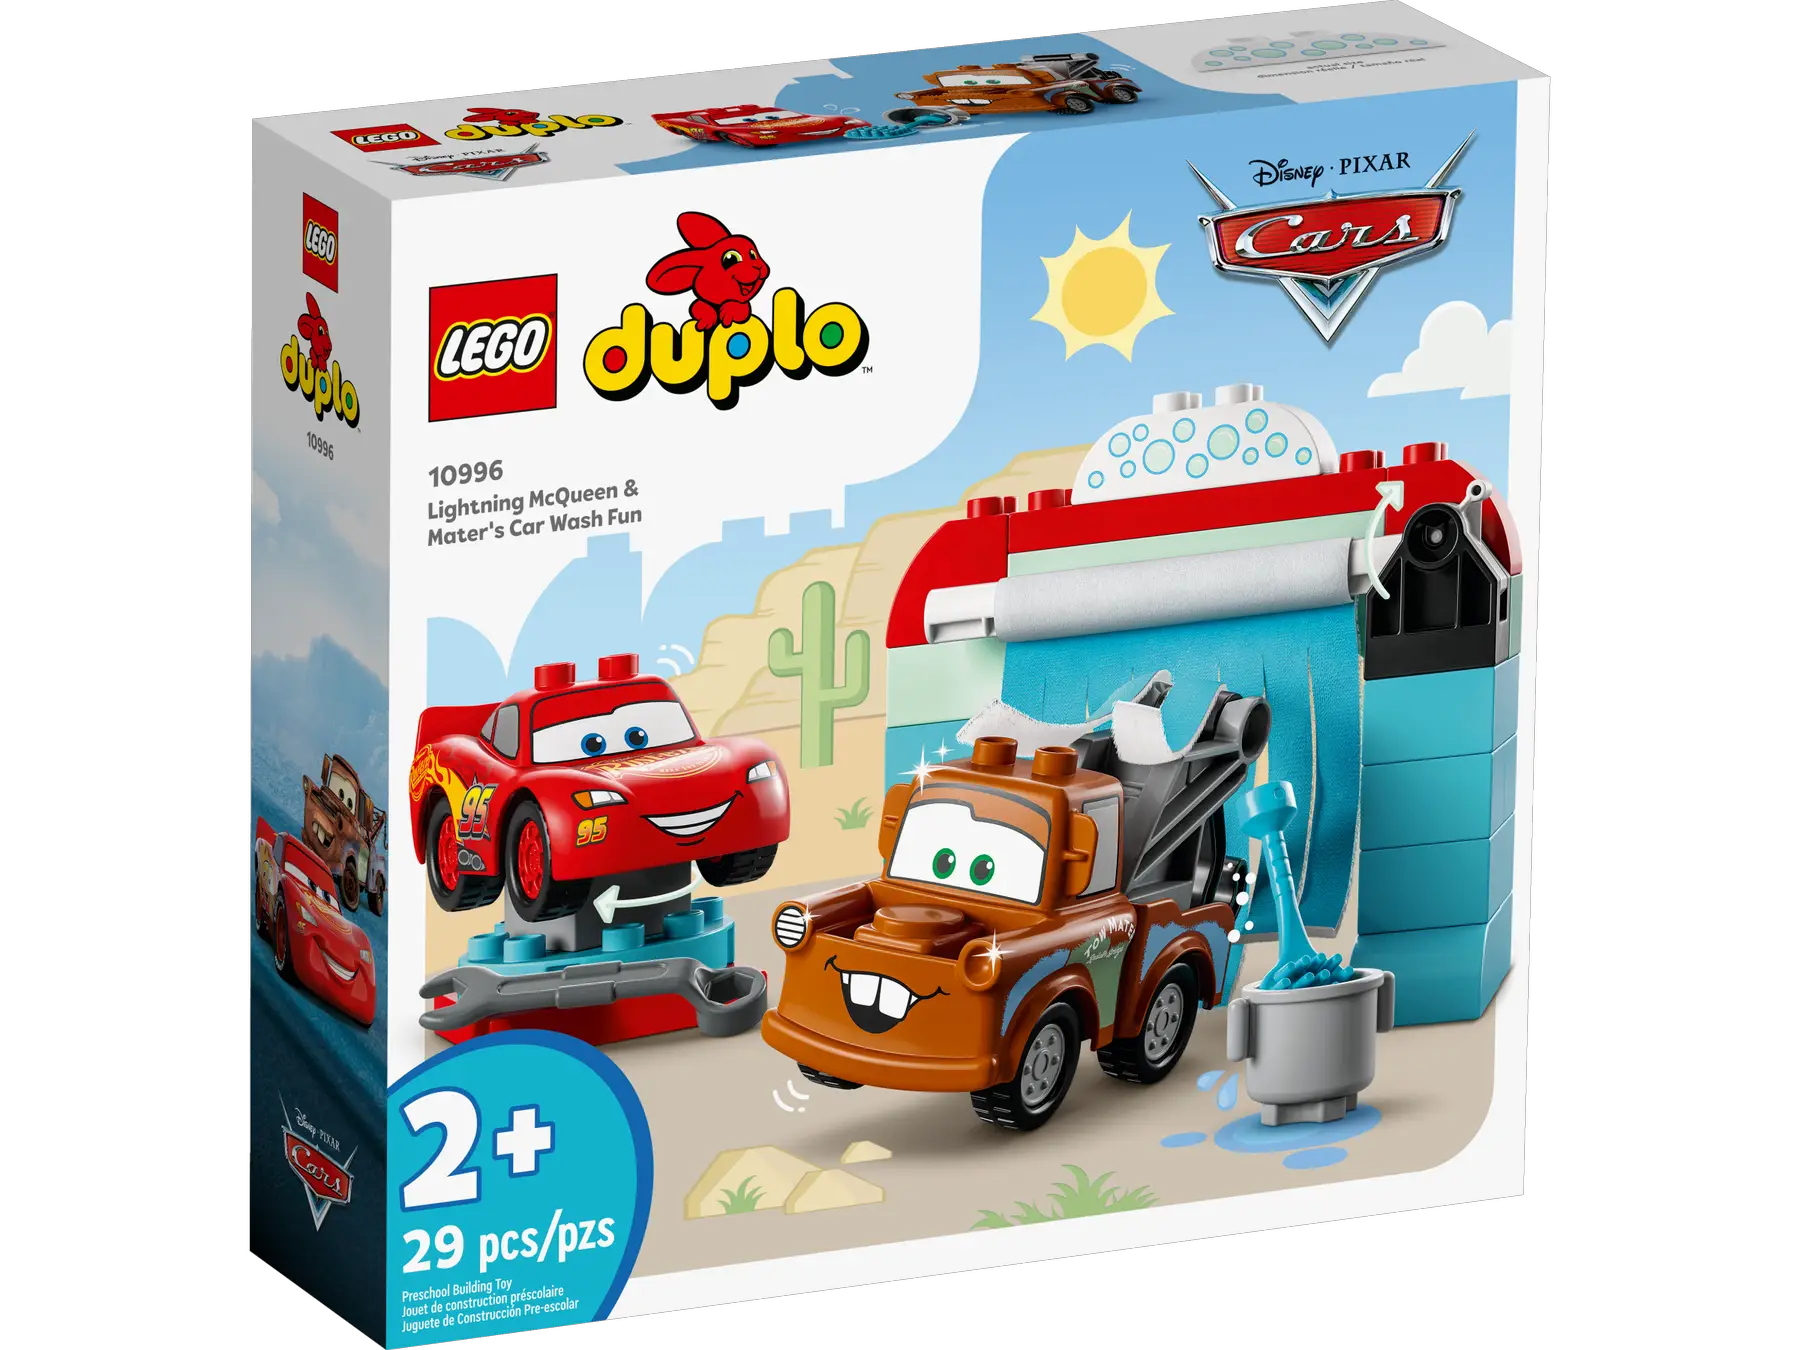 Lego Duplo Lightning McQueen & Mater's Car Wash